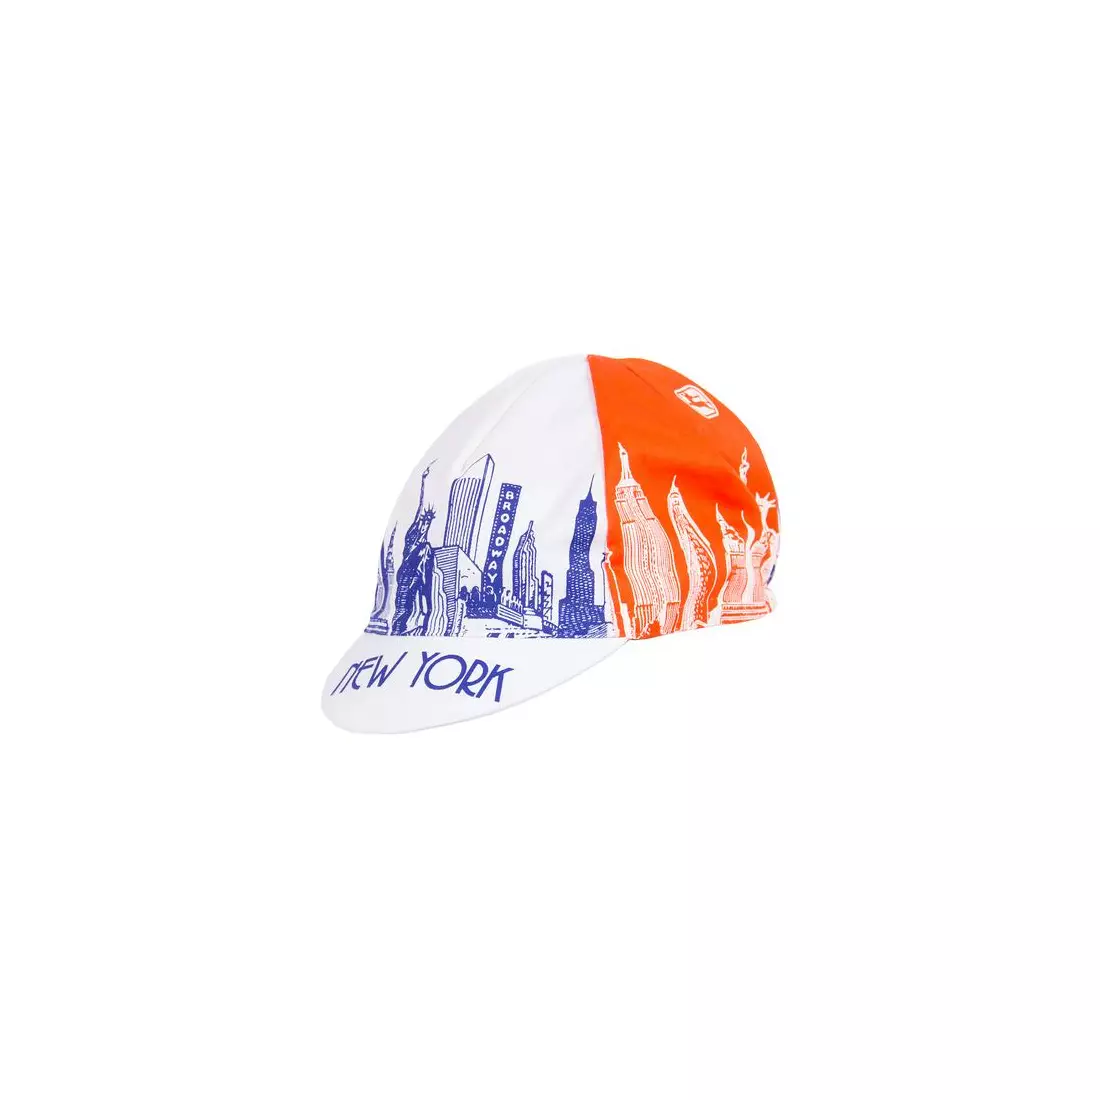 GIORDANA SS18 cycling cap - New York City Landmarks - Blue/Orange/White GI-S5-COCA-NYCL-BLOR one size